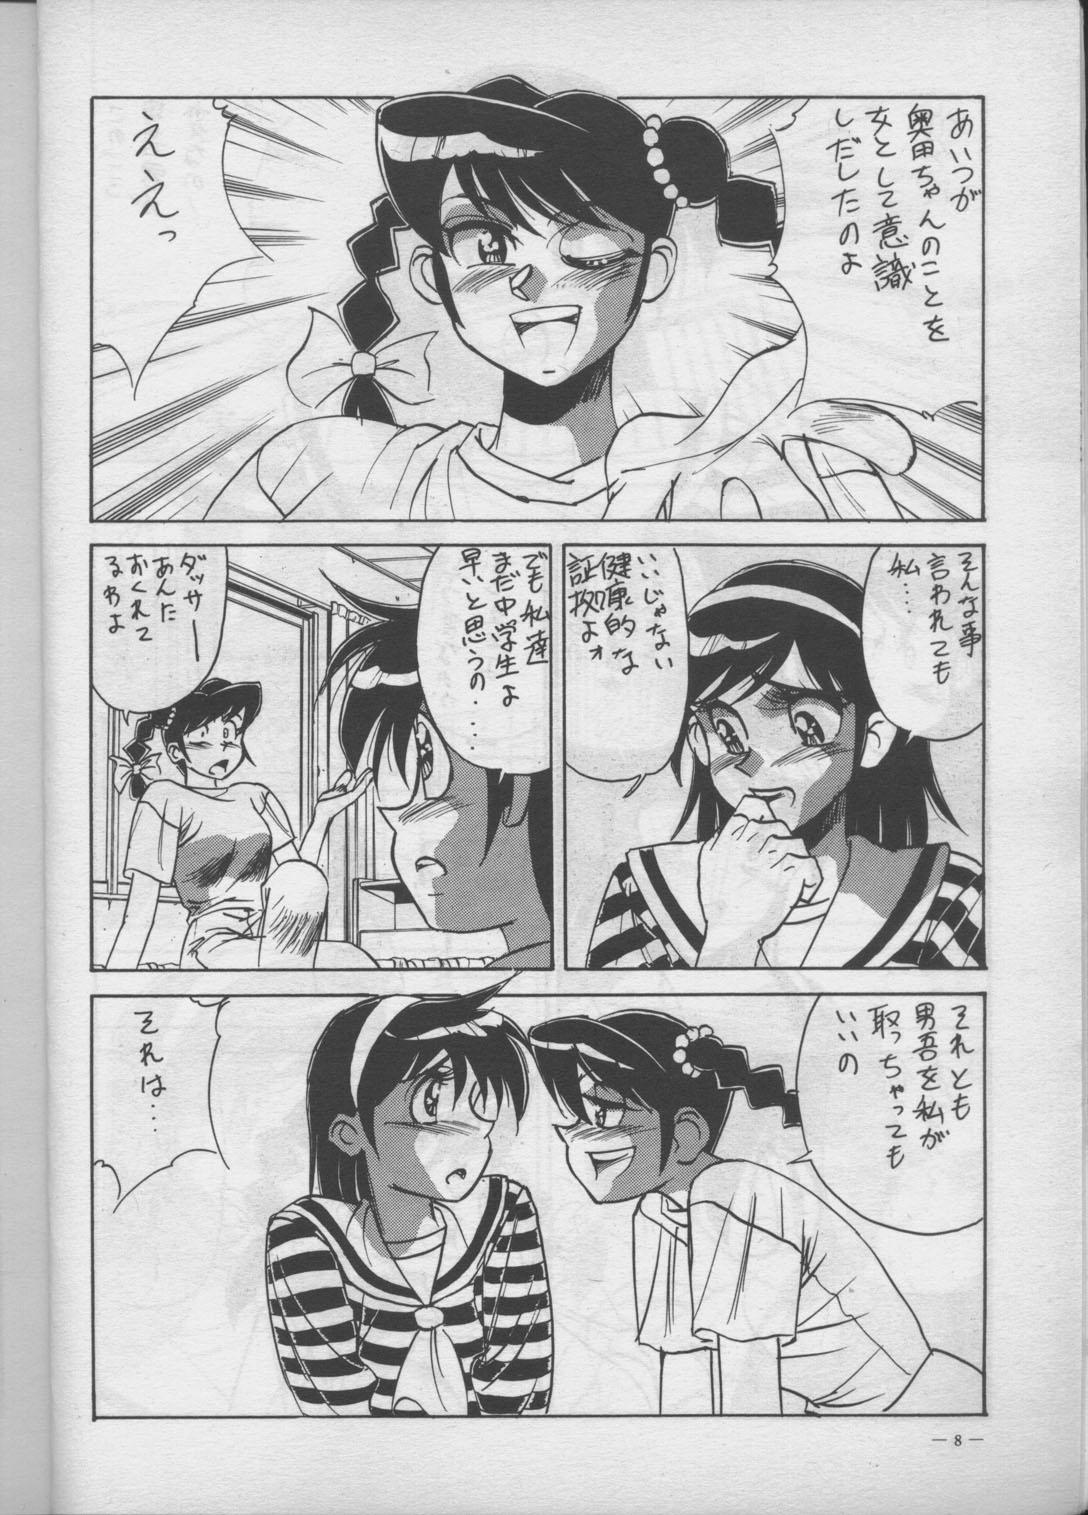 Hotfuck Meirei Denpa Shuuchuuchiryou - Sailor moon Dirty pair flash Seduction - Page 5